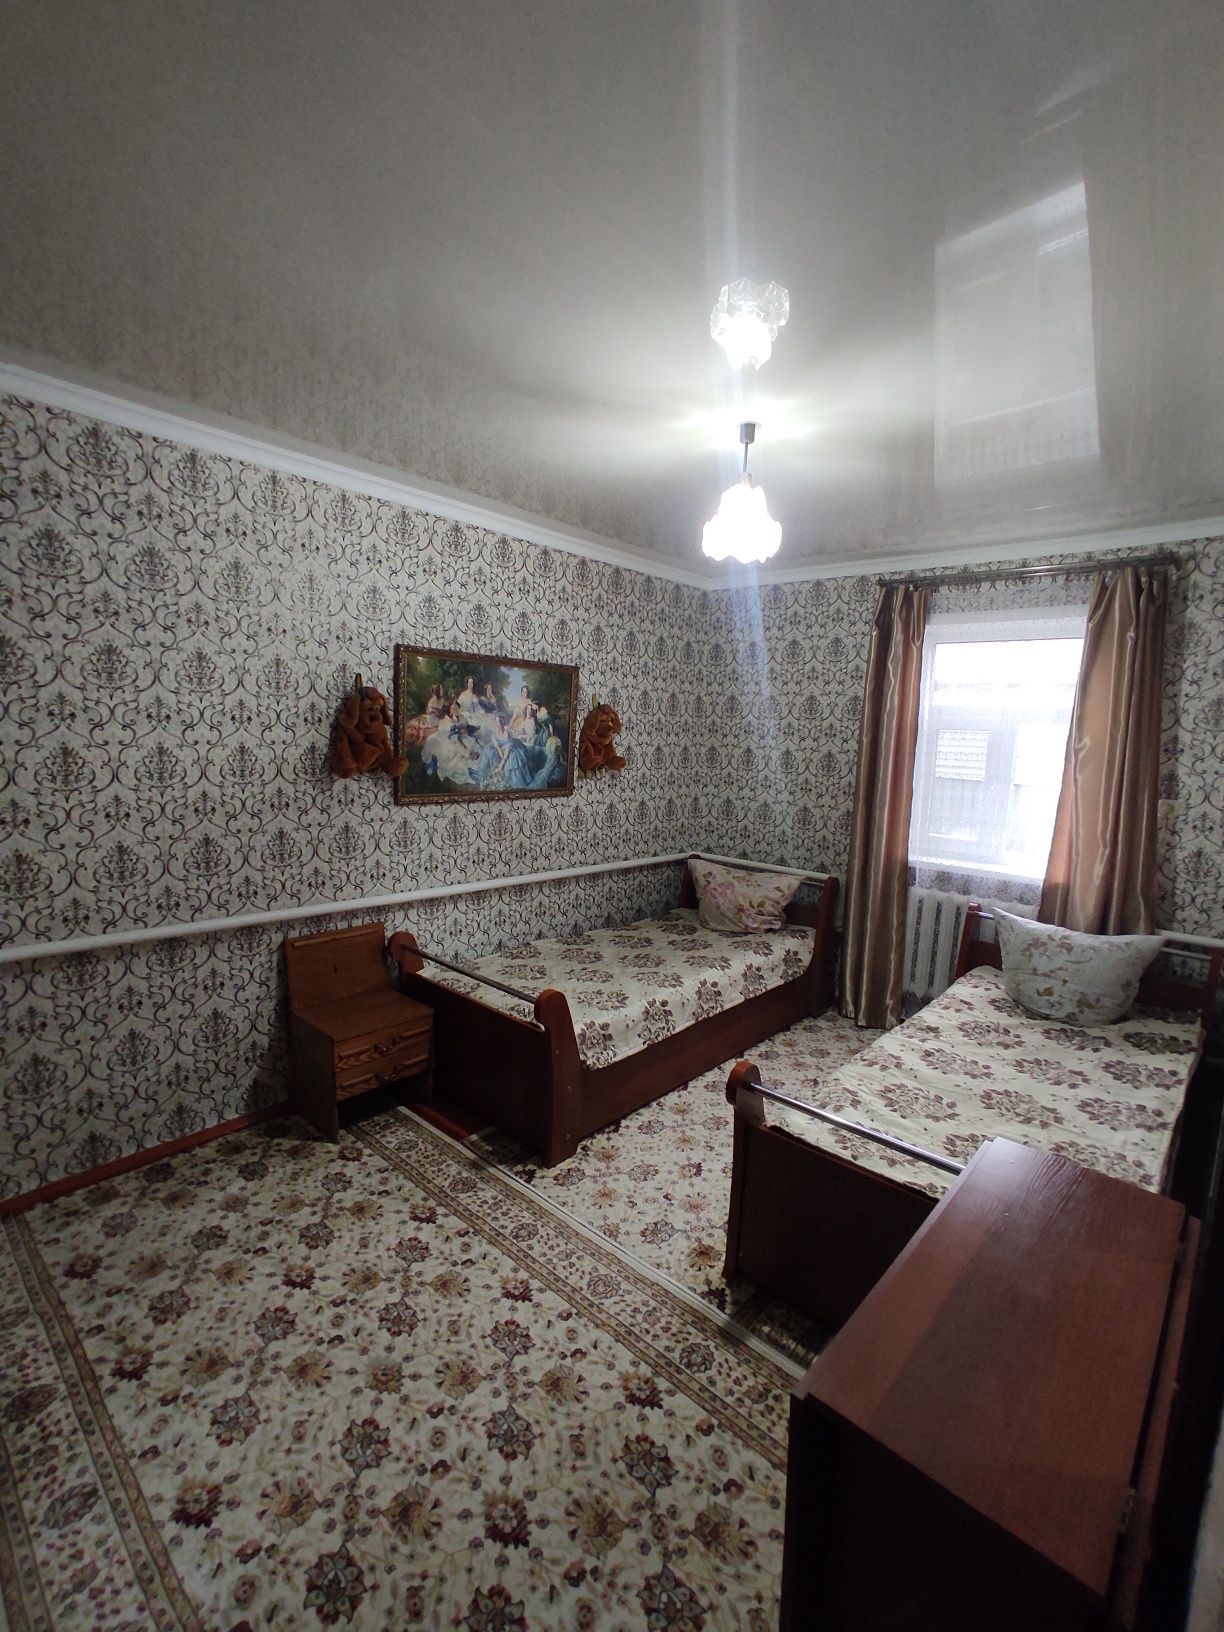 Обменяю дом 3х комнатный на квартиру Нур султан